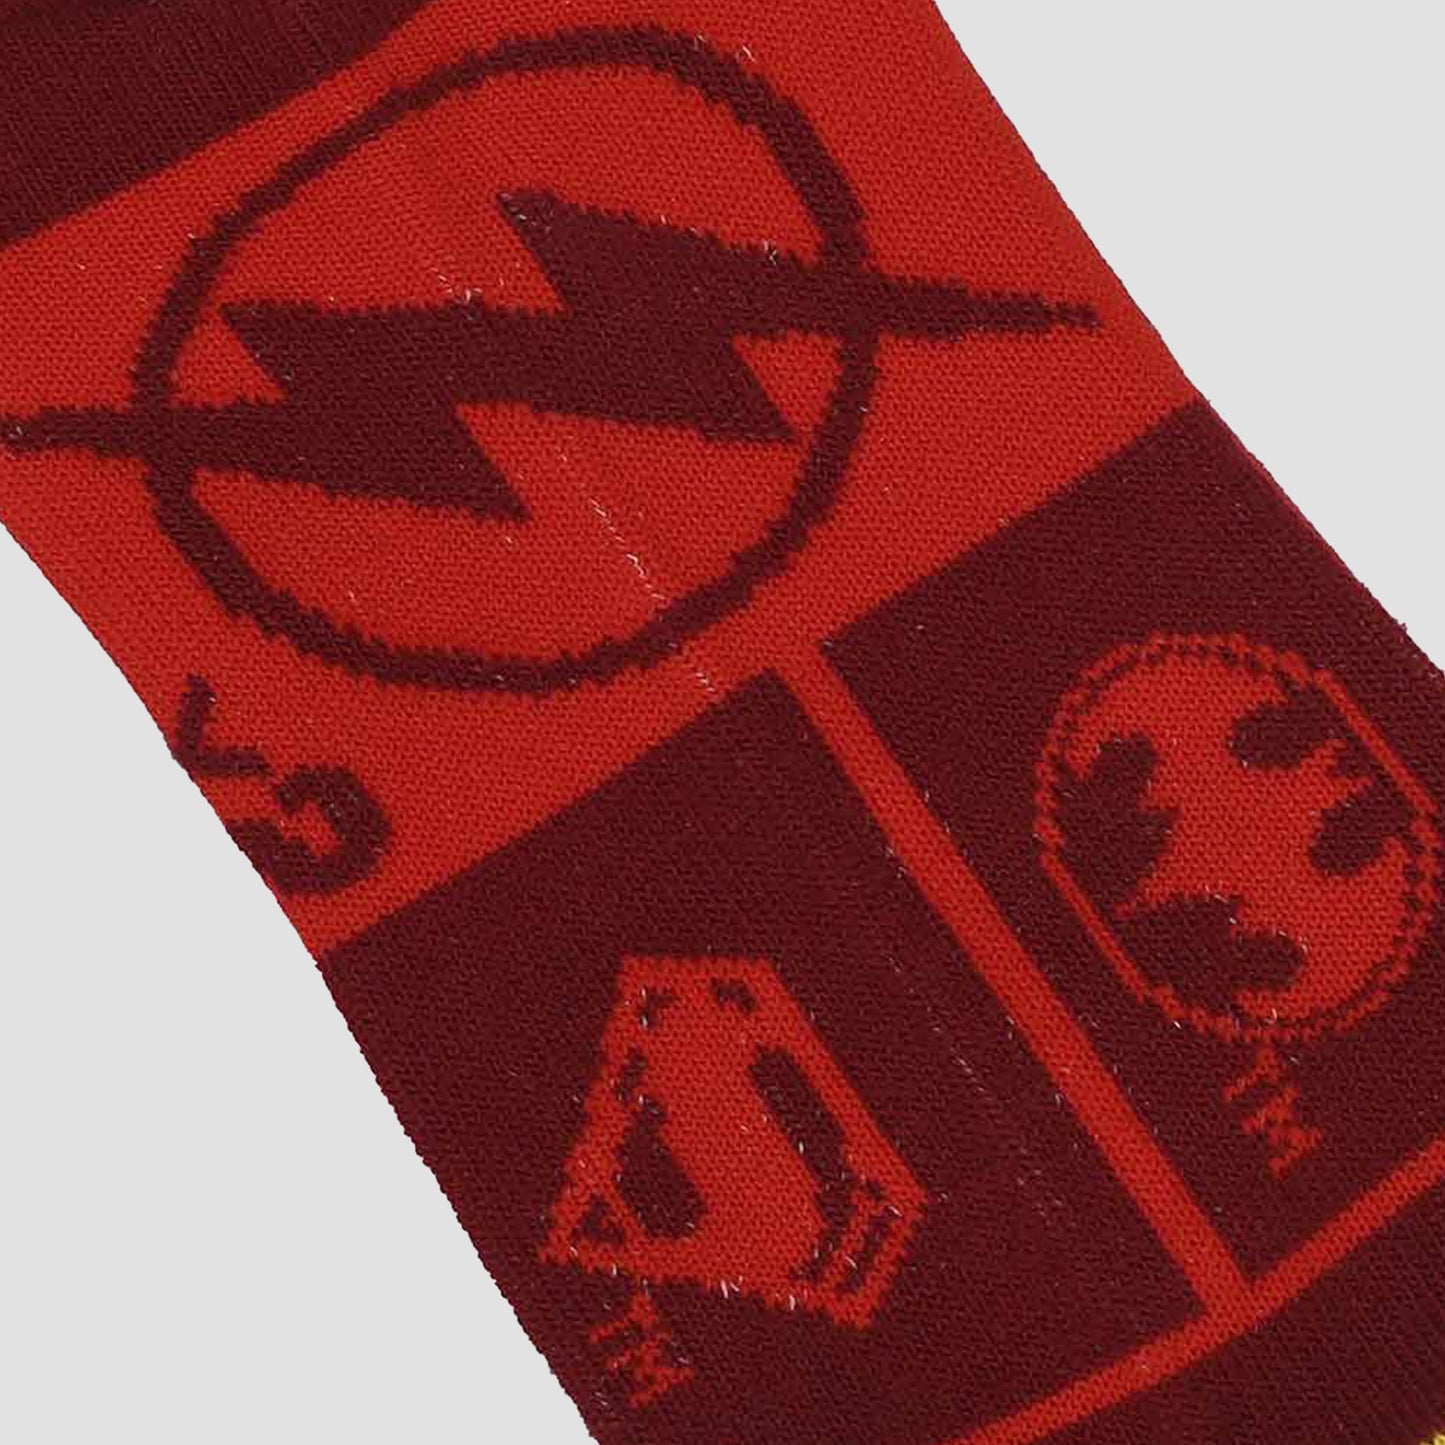 The Flash (DC Comics) Worlds Collide Ankle Socks Set